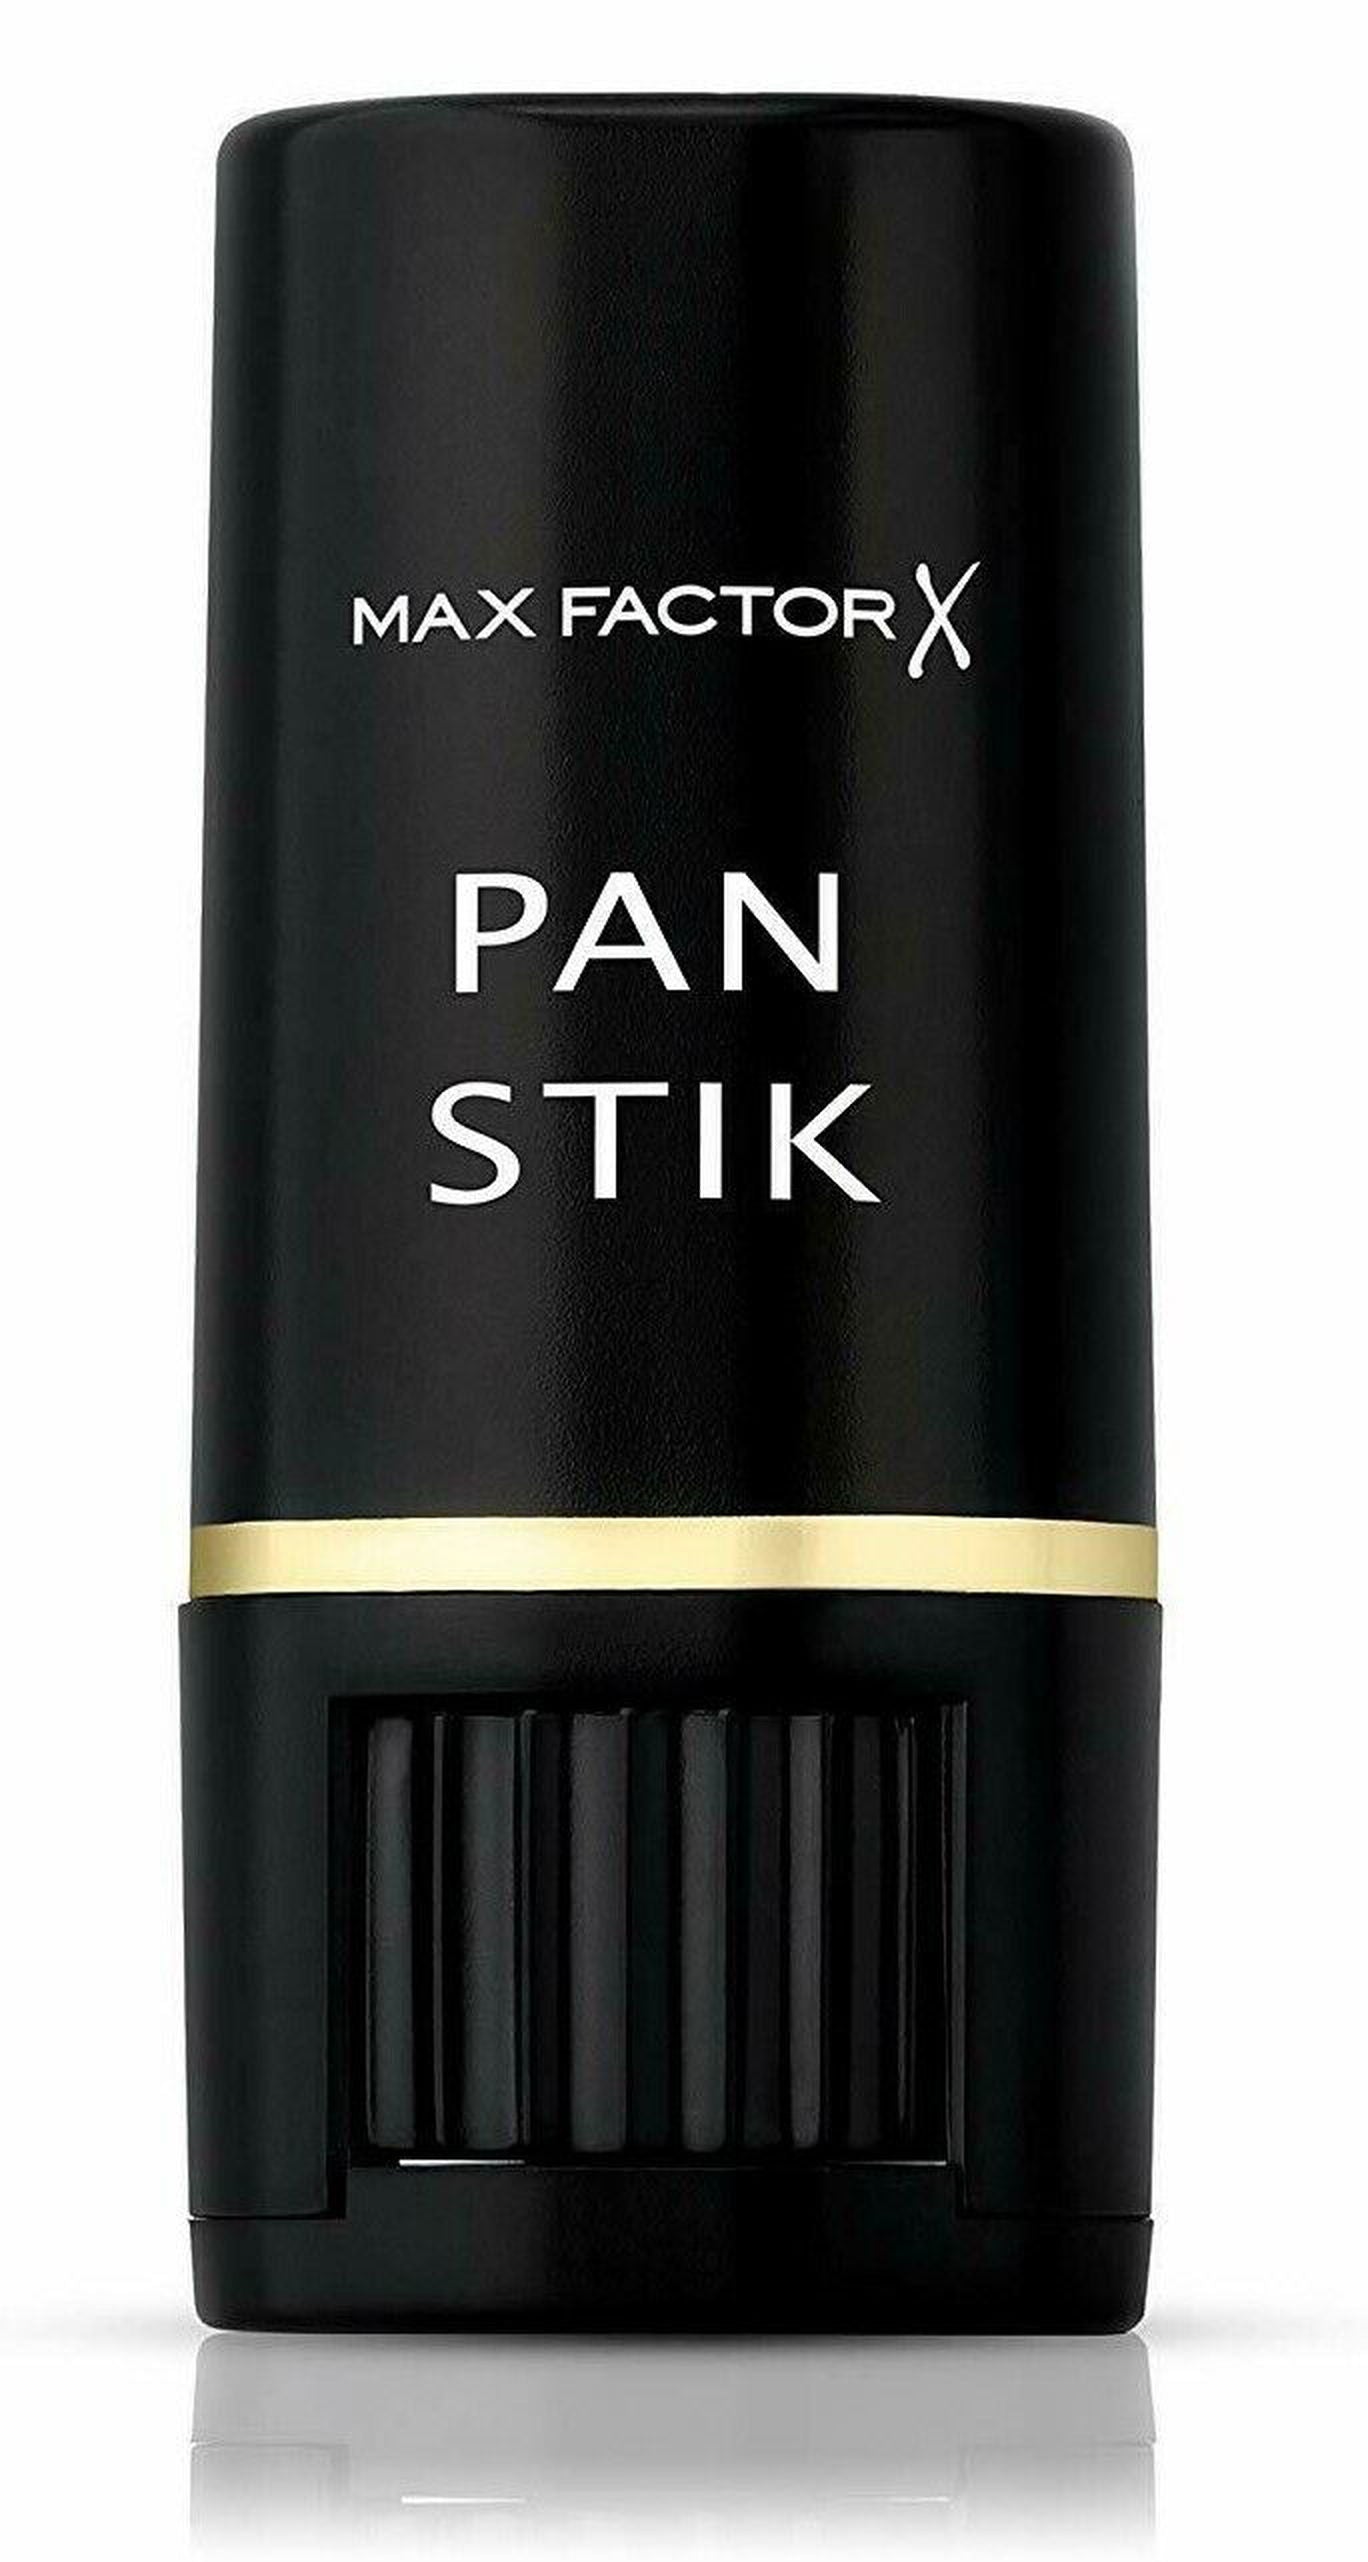 Max Factor Pan Stik Medium Shade 56 | Merthyr Tydfil | Why Not Shop Online